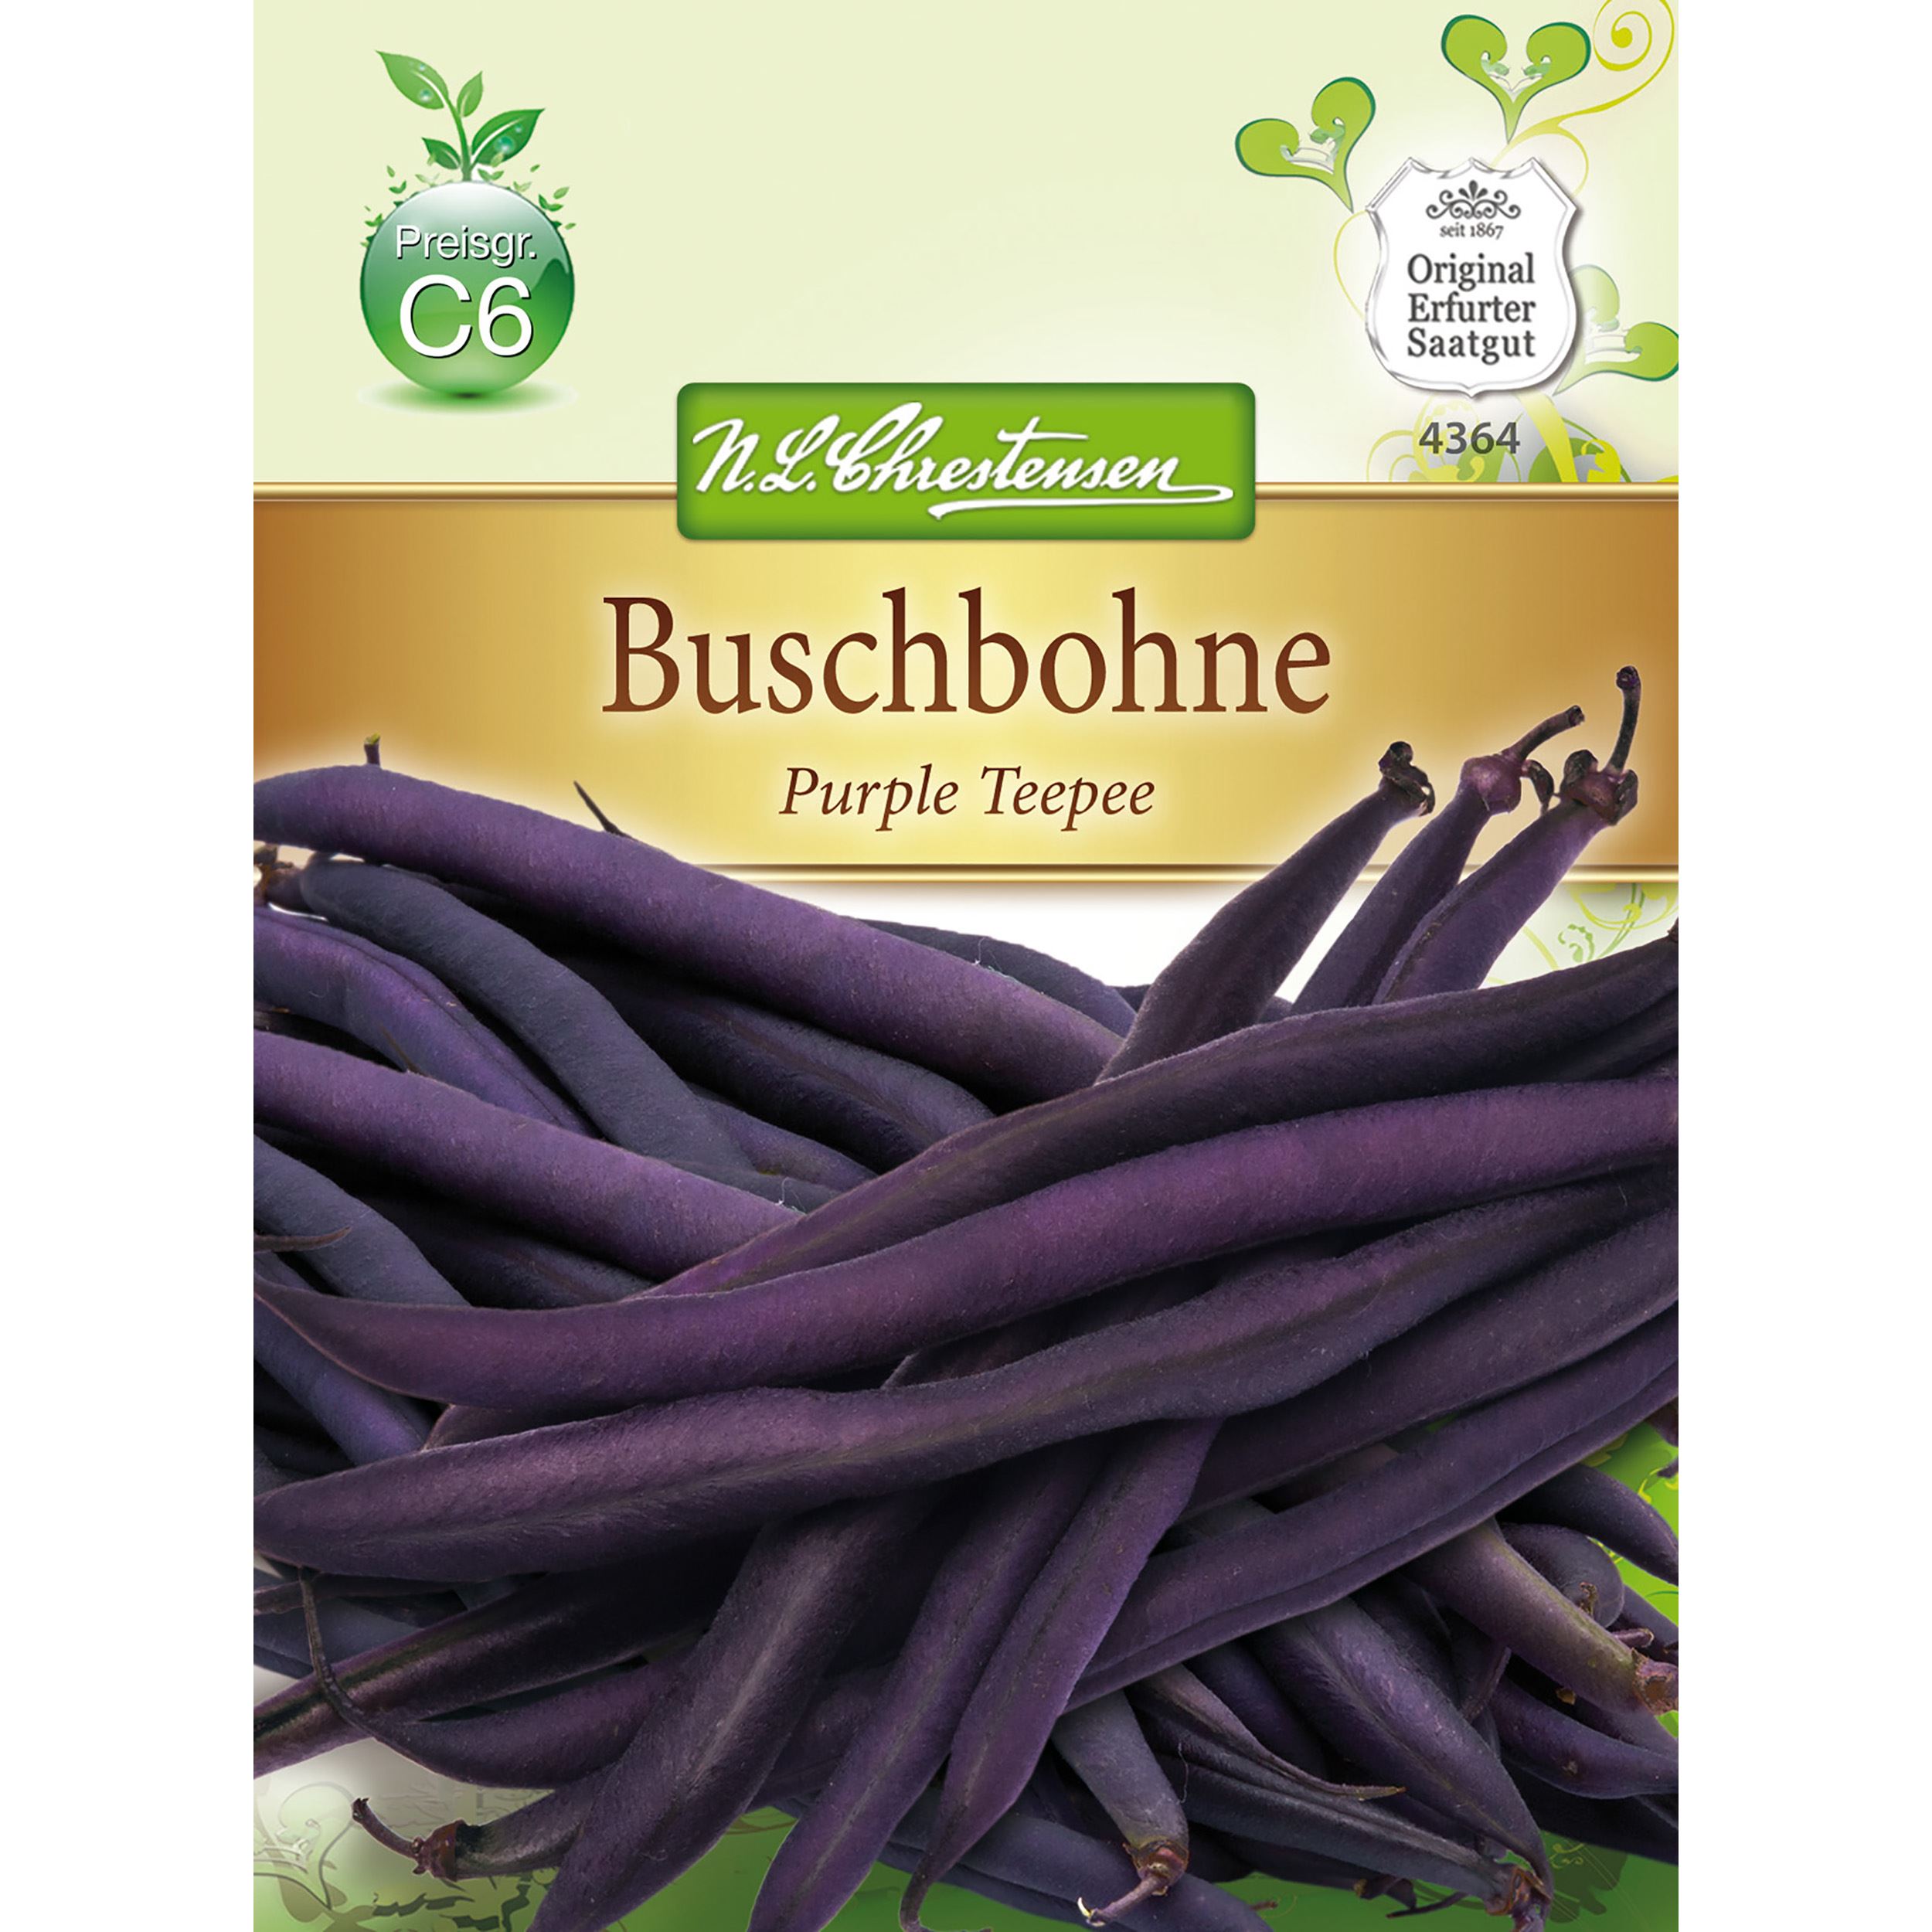 Buschbohnen Purple Teepee, Gluckentyp